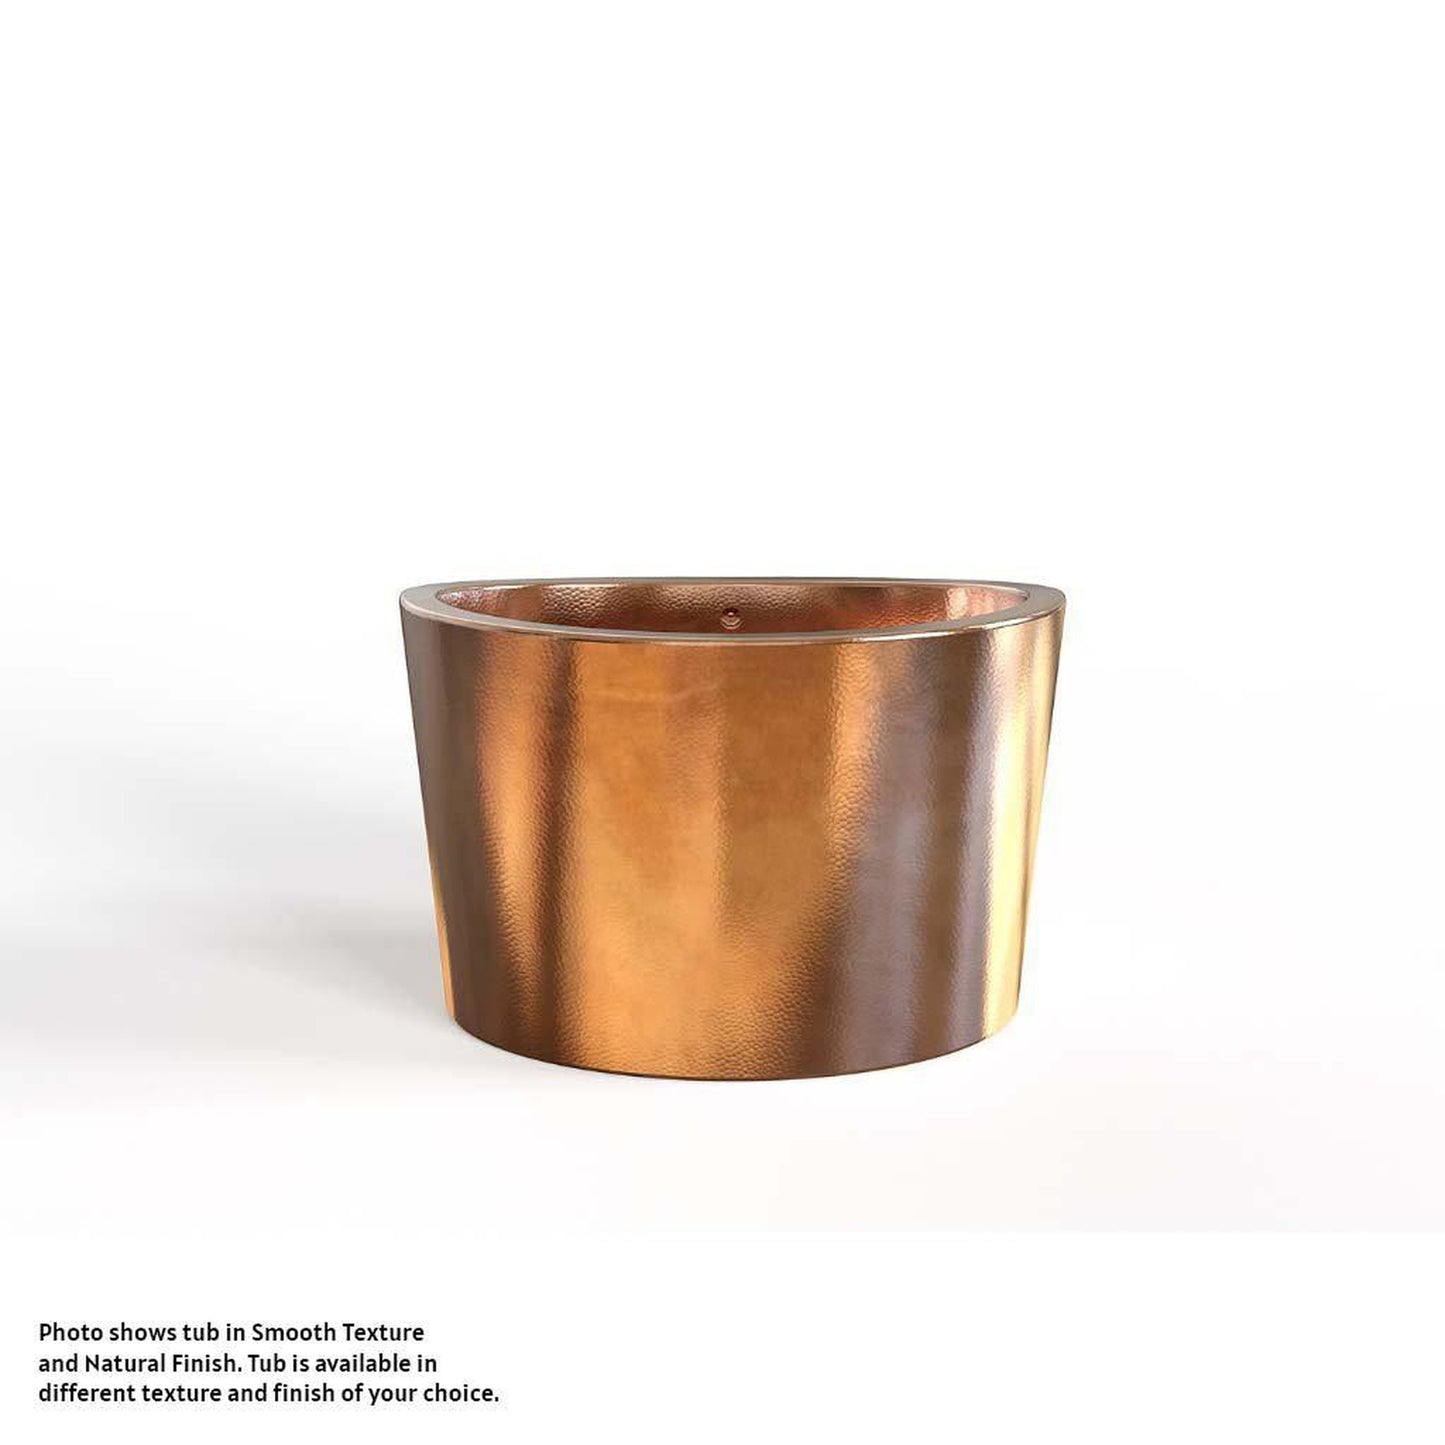 Amoretti Brothers Tokyo Spa 64" Freestanding Japanese Soaking Copper Tub in Copper Finish